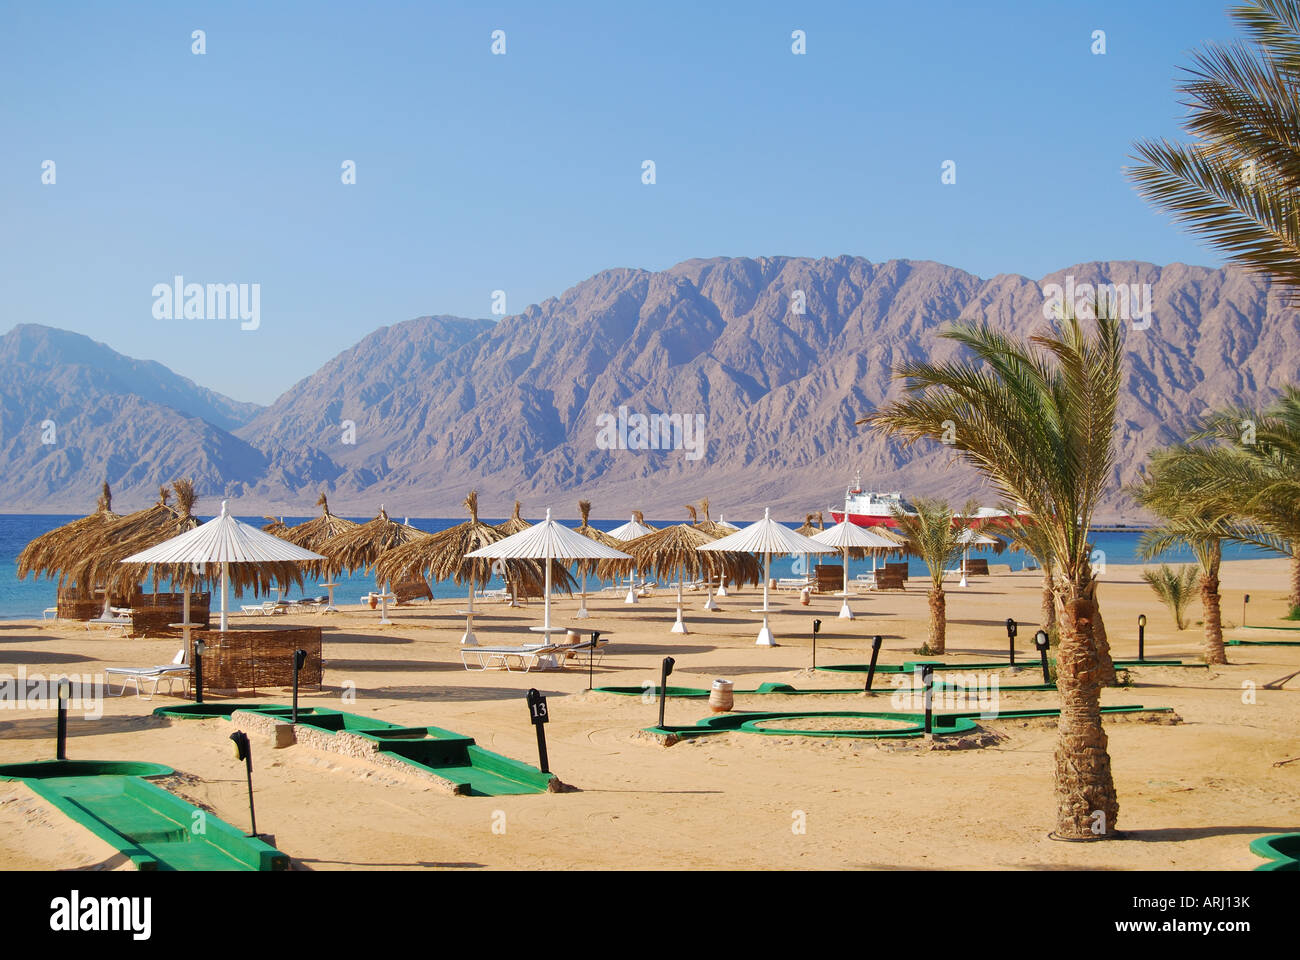 Hilton Nuweiba Coral Resort Hotel beach, Nuweiba, Sinai Peninsula, Republic of Egypt Stock Photo